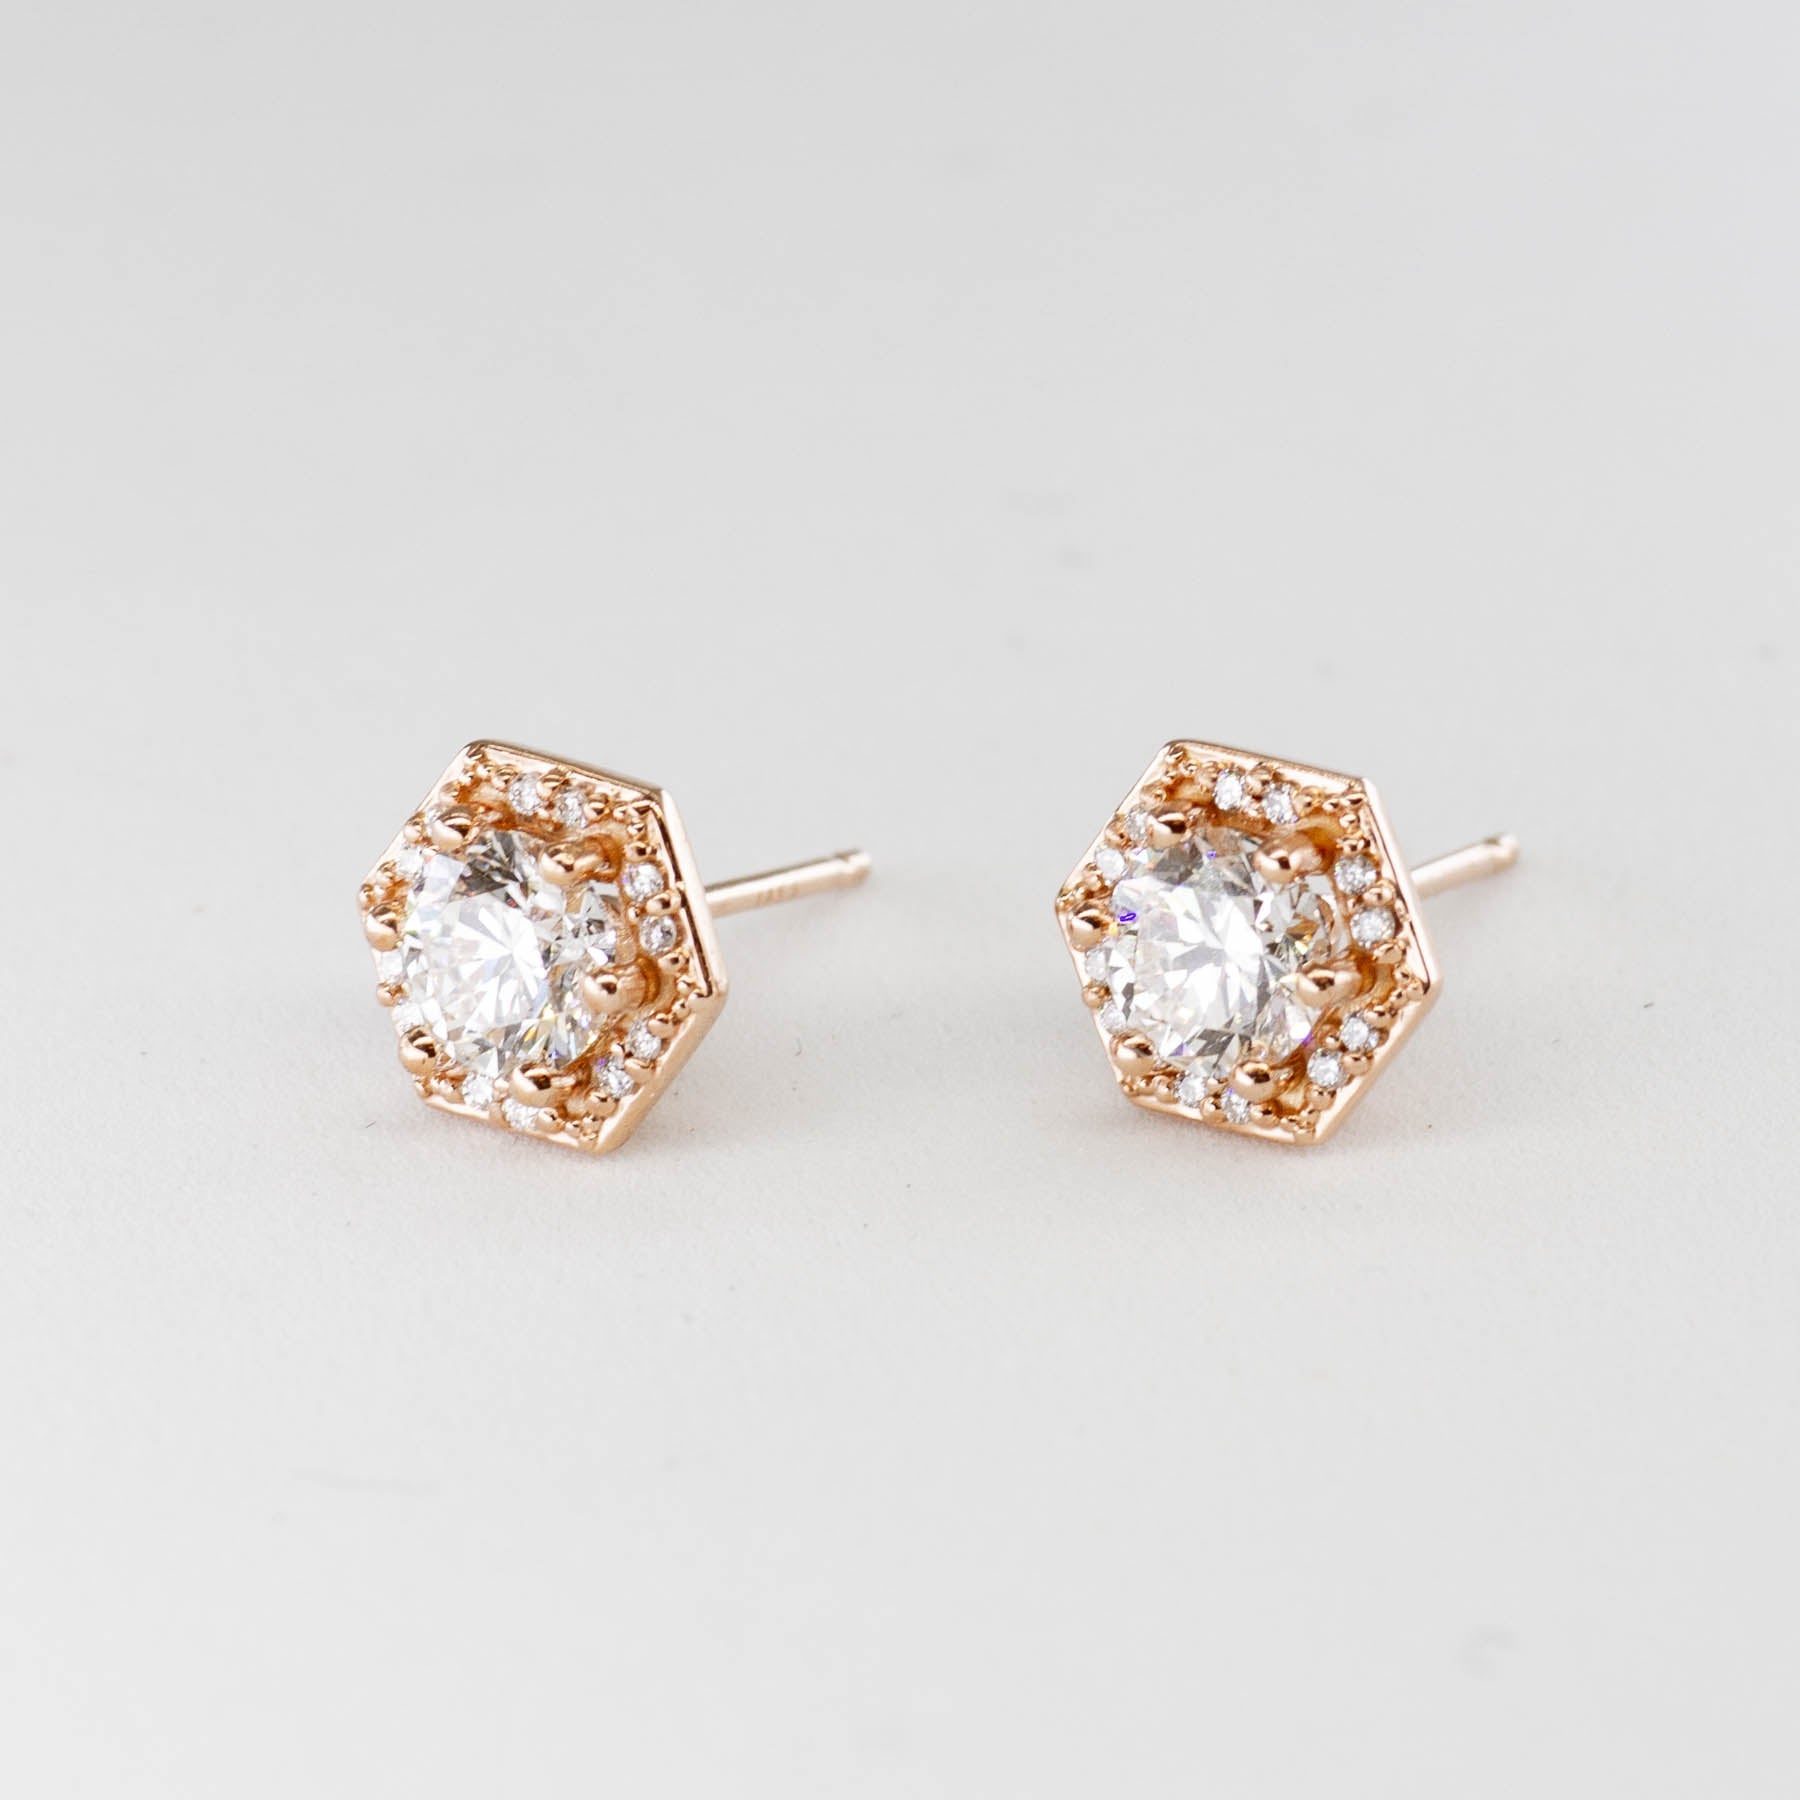 100 Ways' Hexagon Halo Diamond Stud Earrings in Rose Gold | Canadian Diamonds | 1.05 ctw - 100 Ways